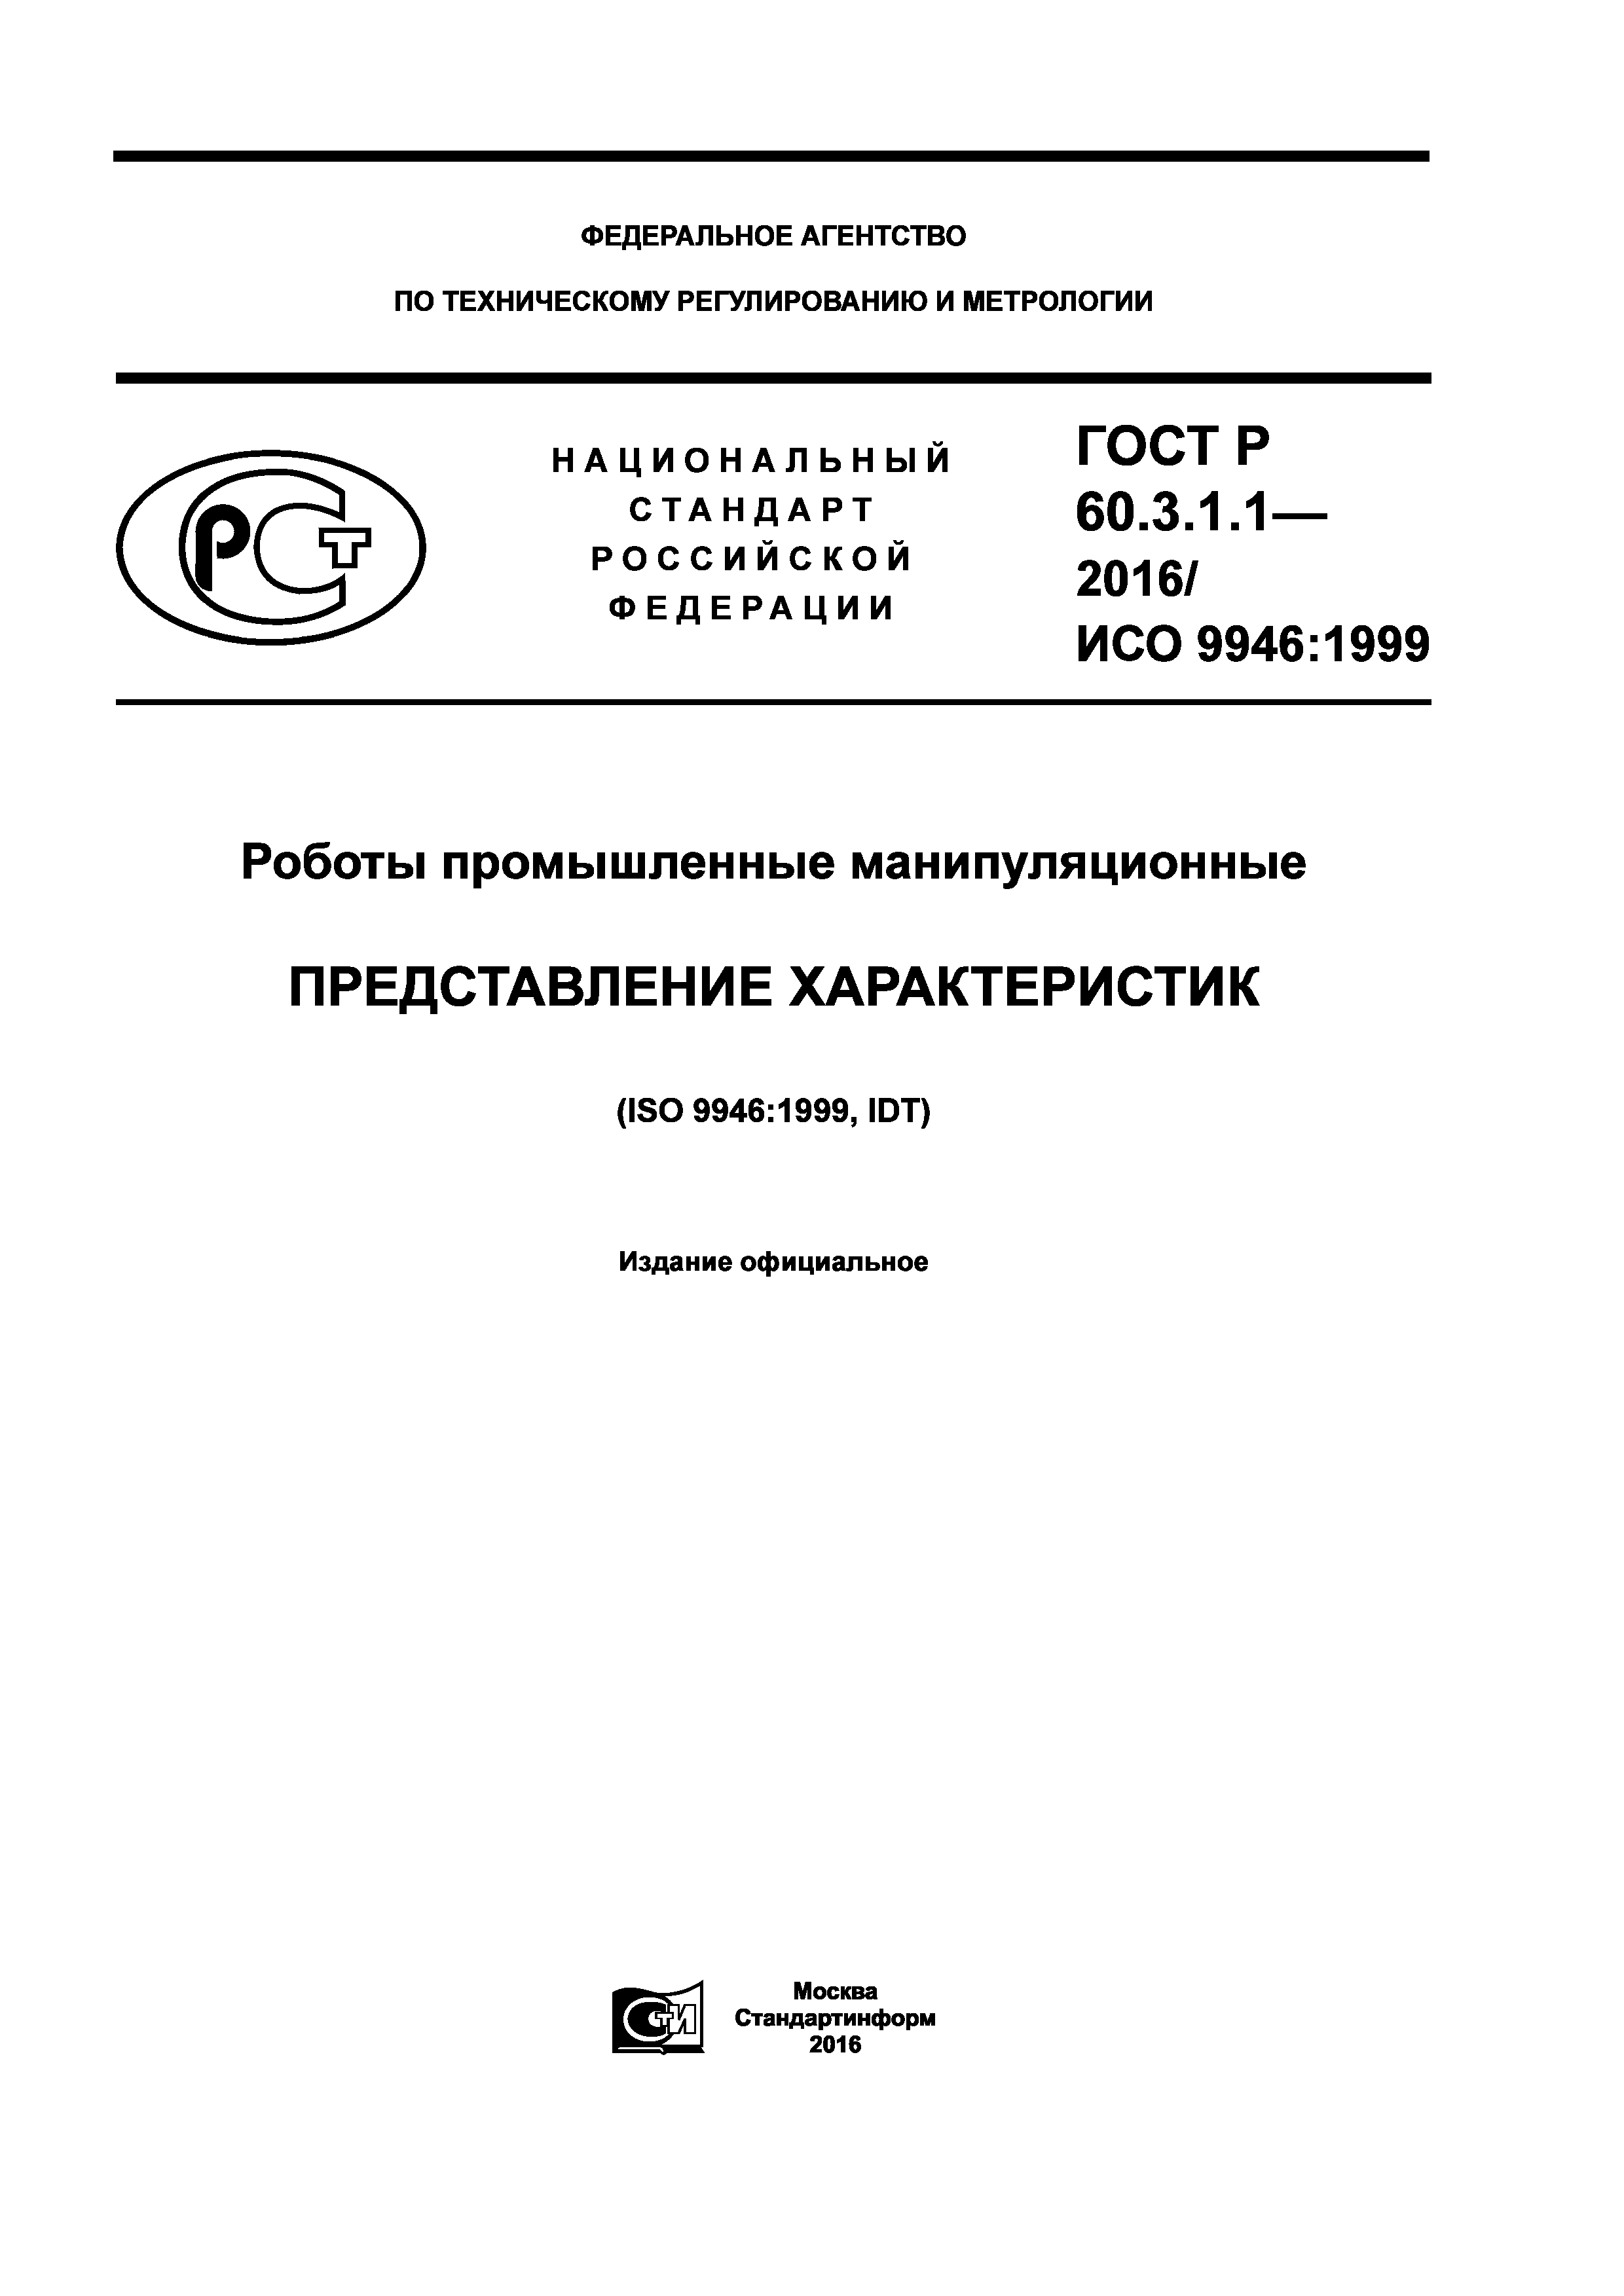 ГОСТ Р 60.3.1.1-2016